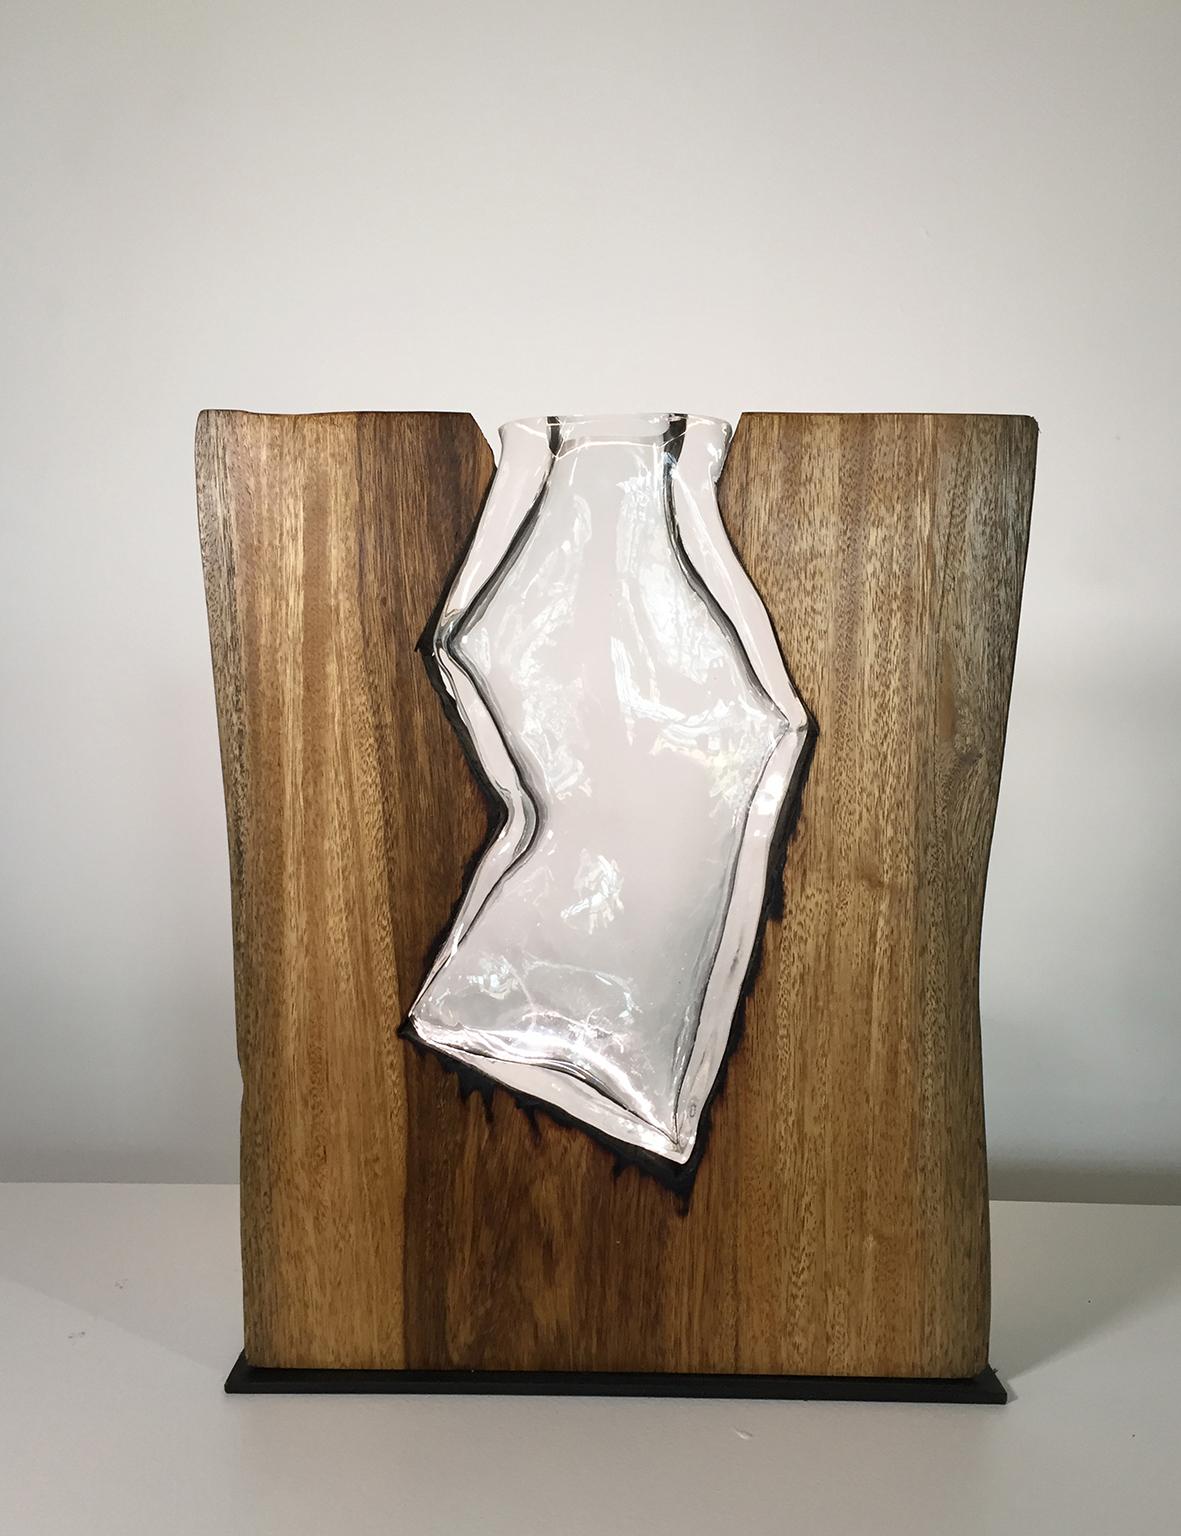 Hand Blown Clear Glass with Live Edge Wood, Vase Sculpture Scott Slagerman - Contemporary Mixed Media Art by Scott Slagerman / Jim Fishman